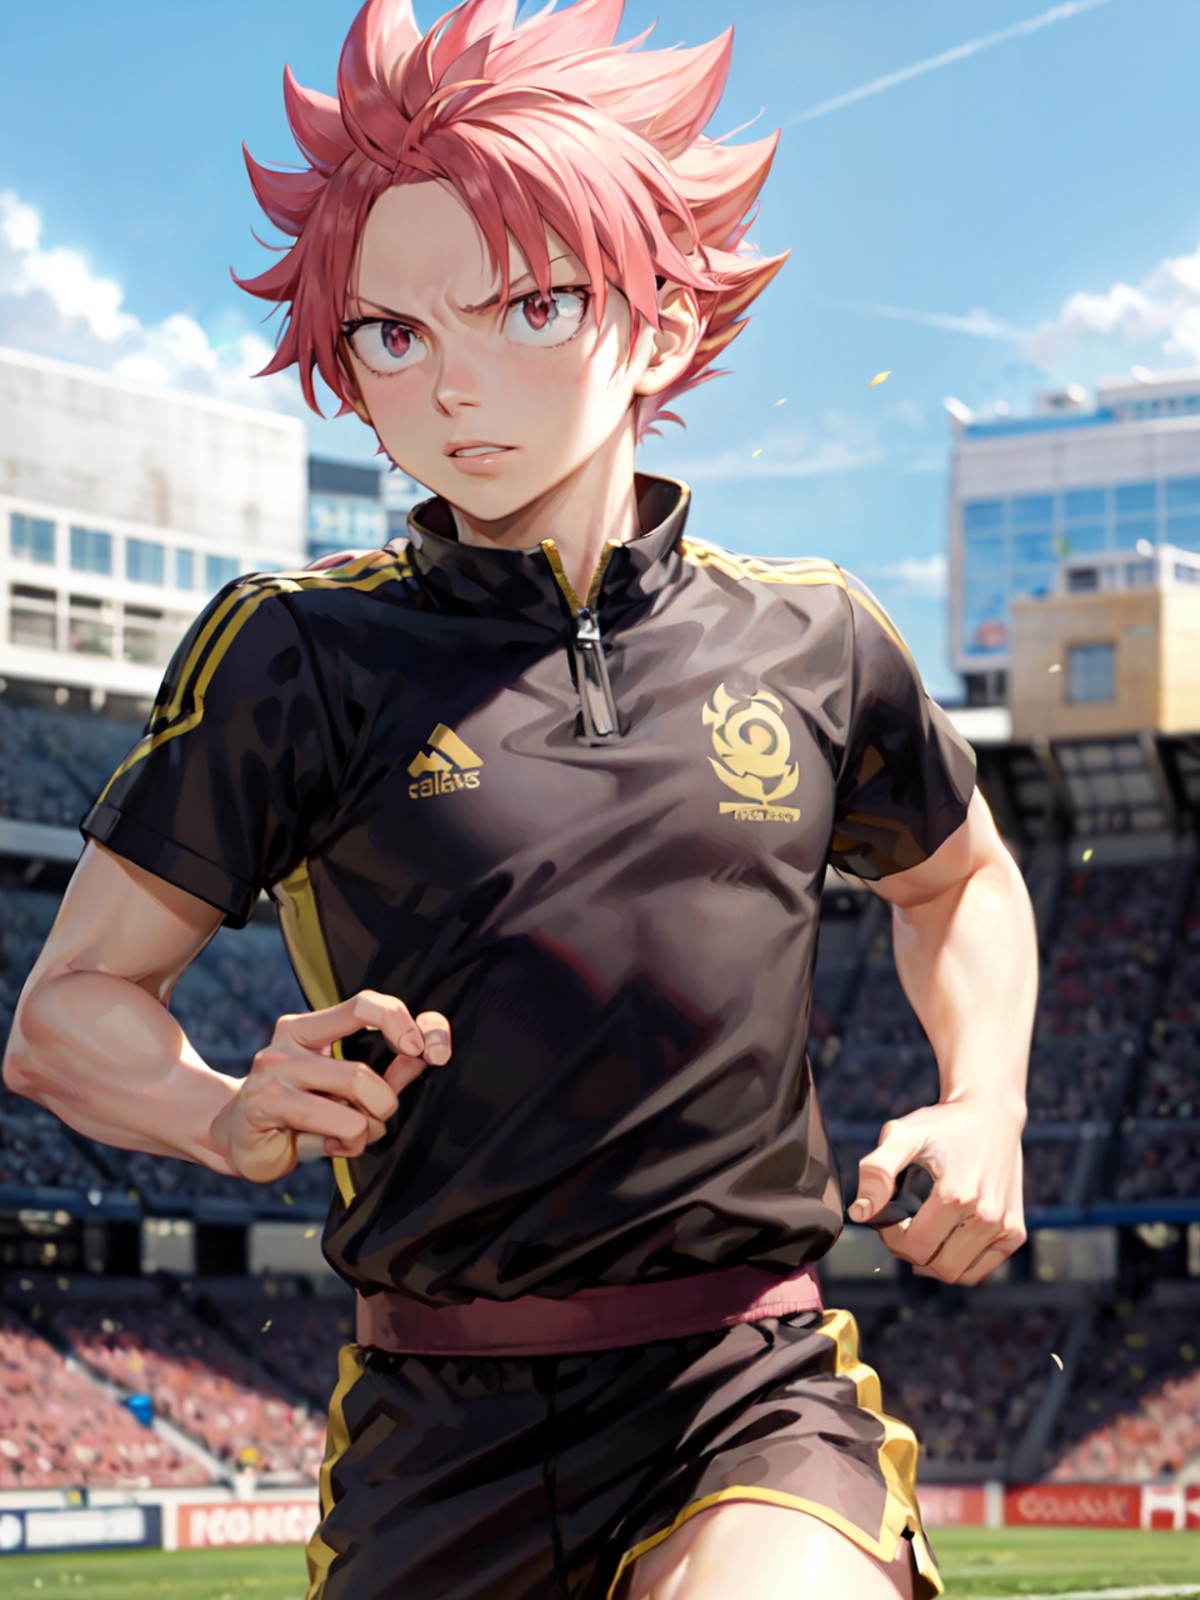 masterpiece, best quality, 1boy, natsu dragneel, running, soccer uniform, <lora:Natsu:0.8>